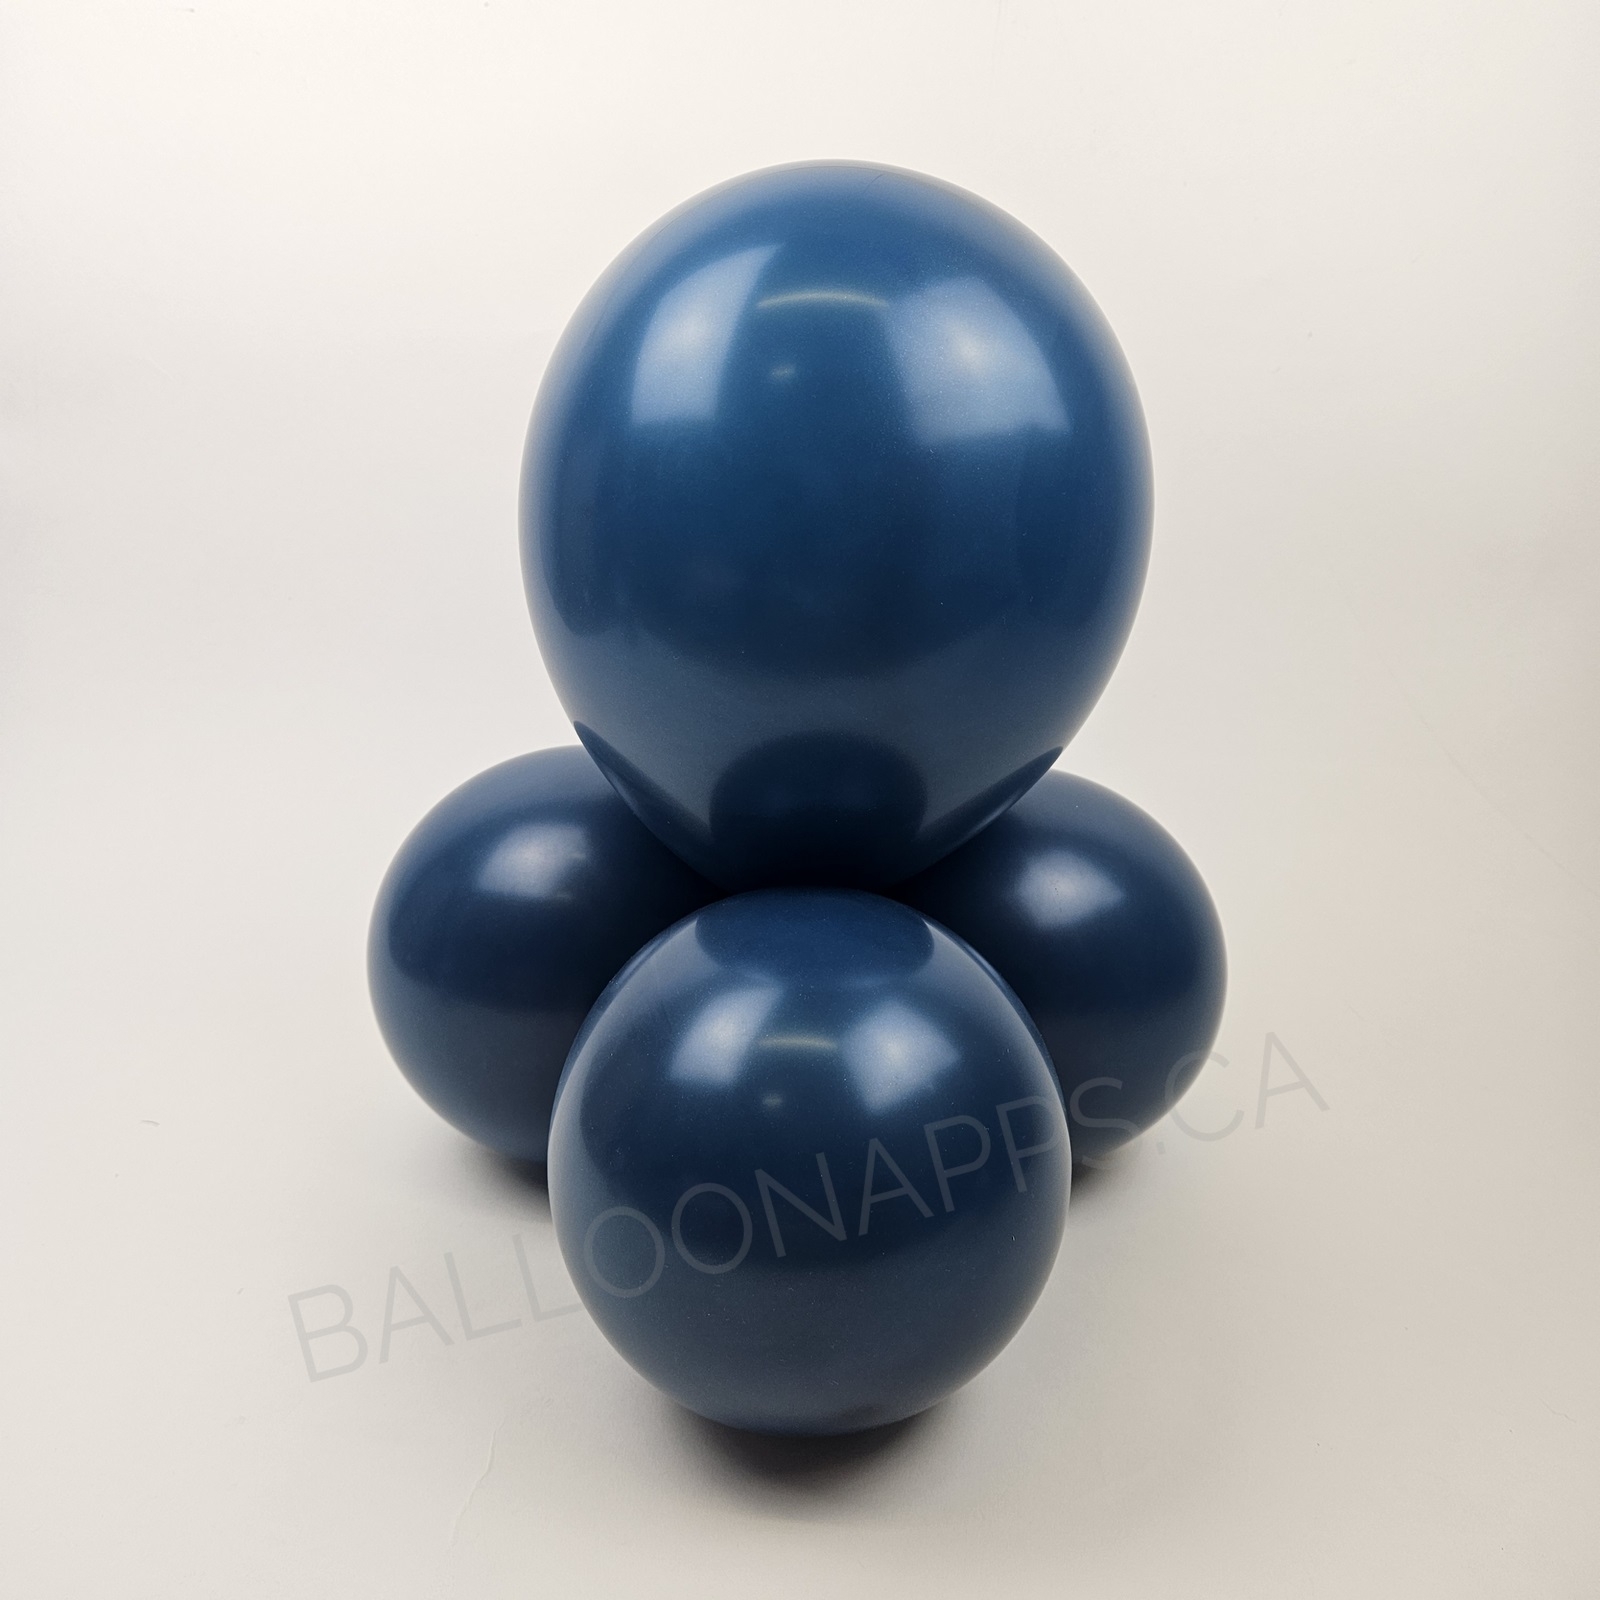 balloon texture SEM (1) 24